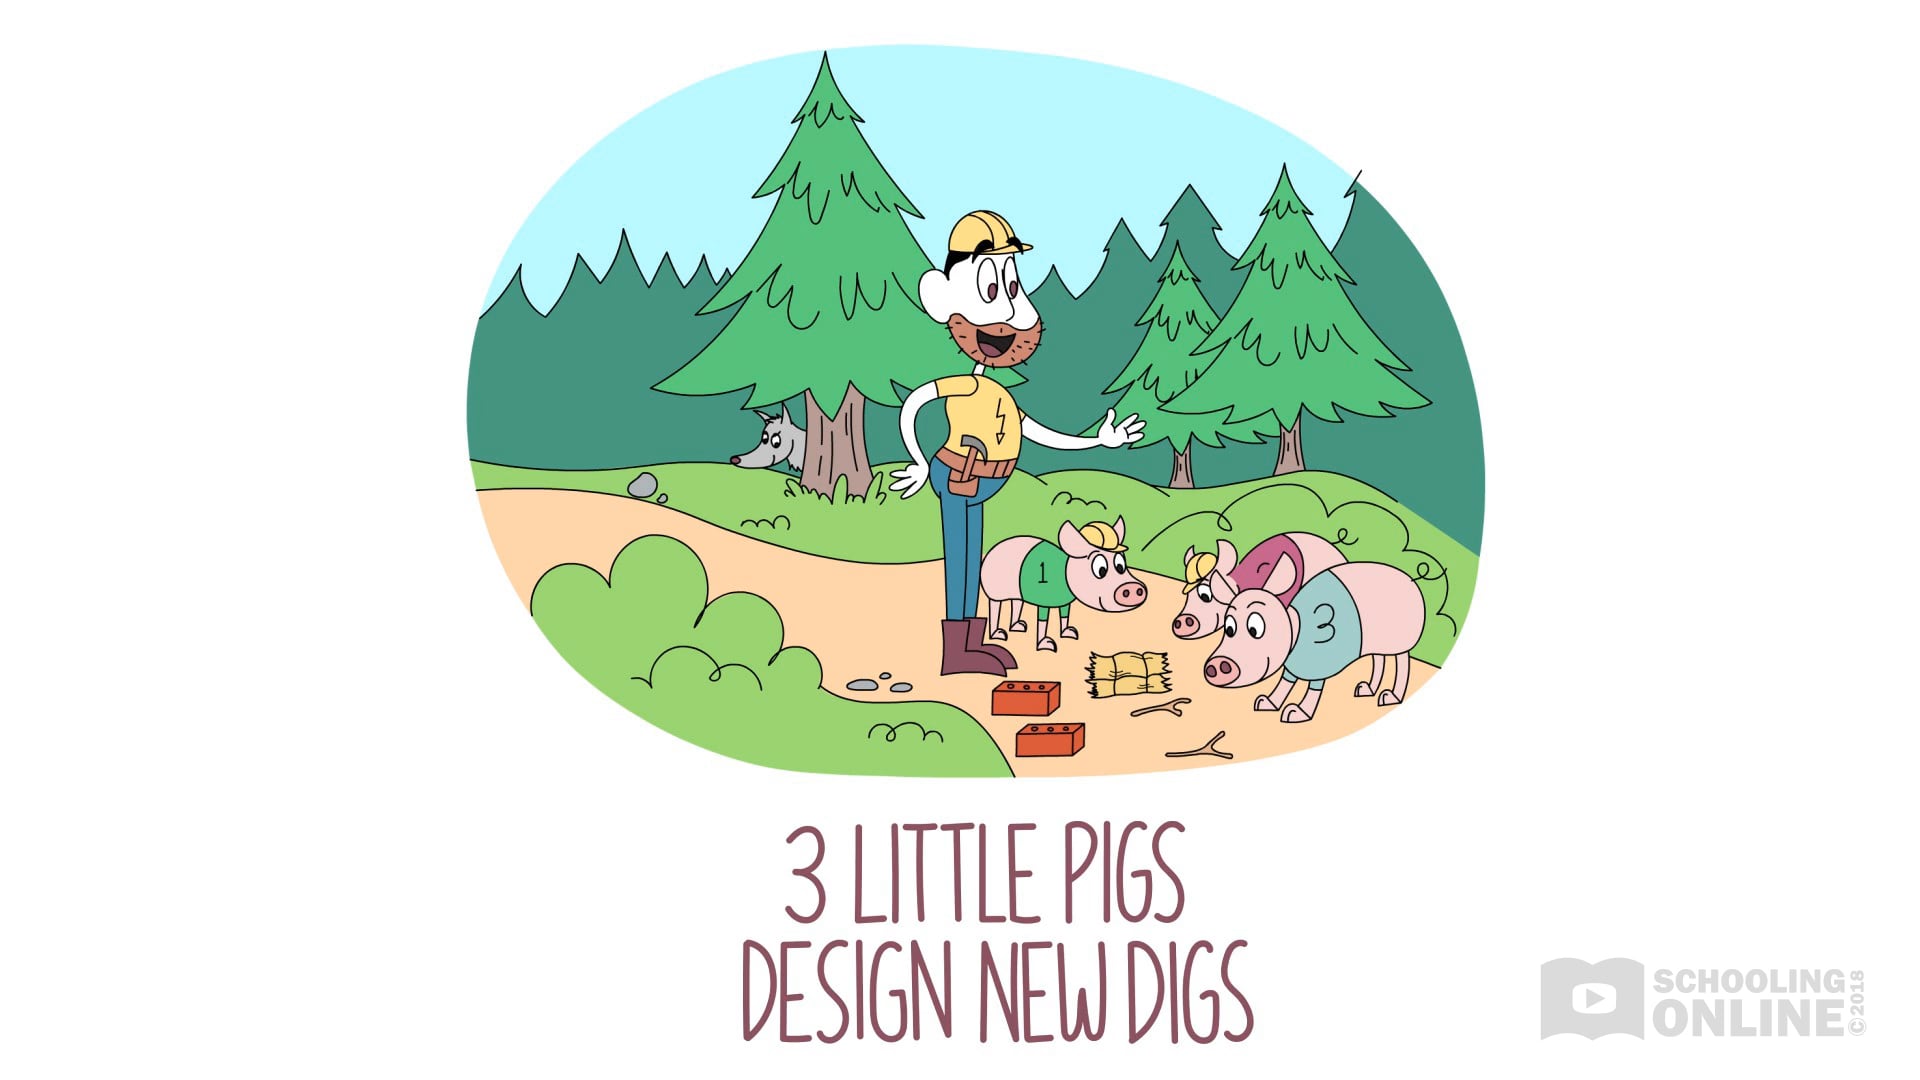 Material World 3 - 3 Little Pigs Design New Digs